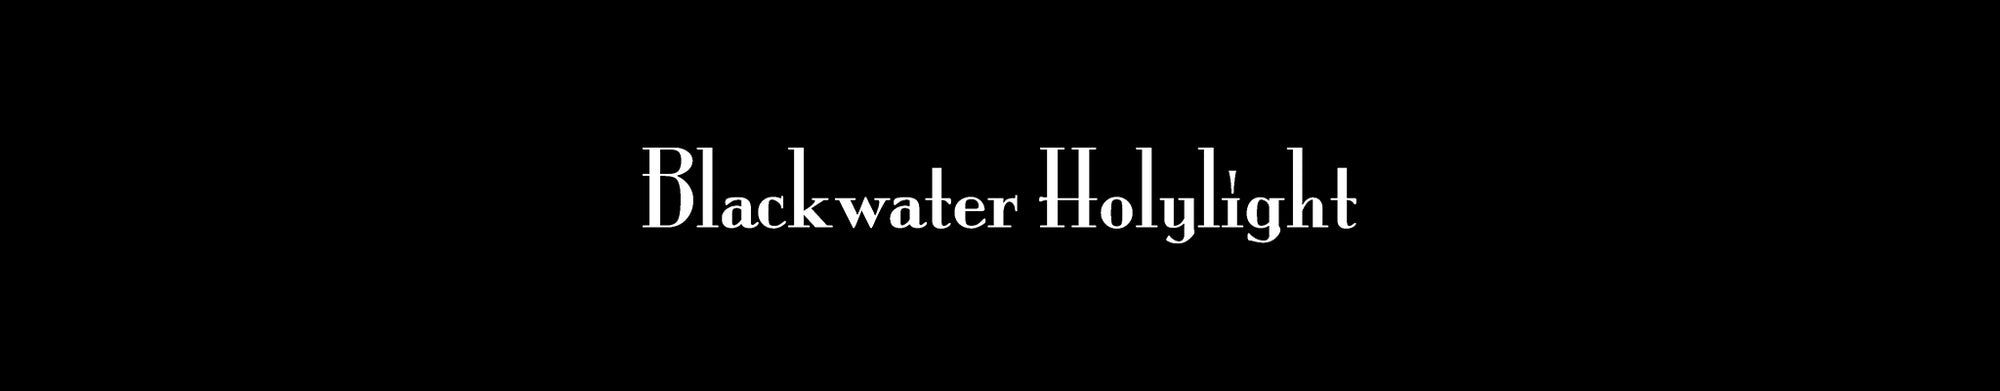 BLACKWATER HOLYLIGHT